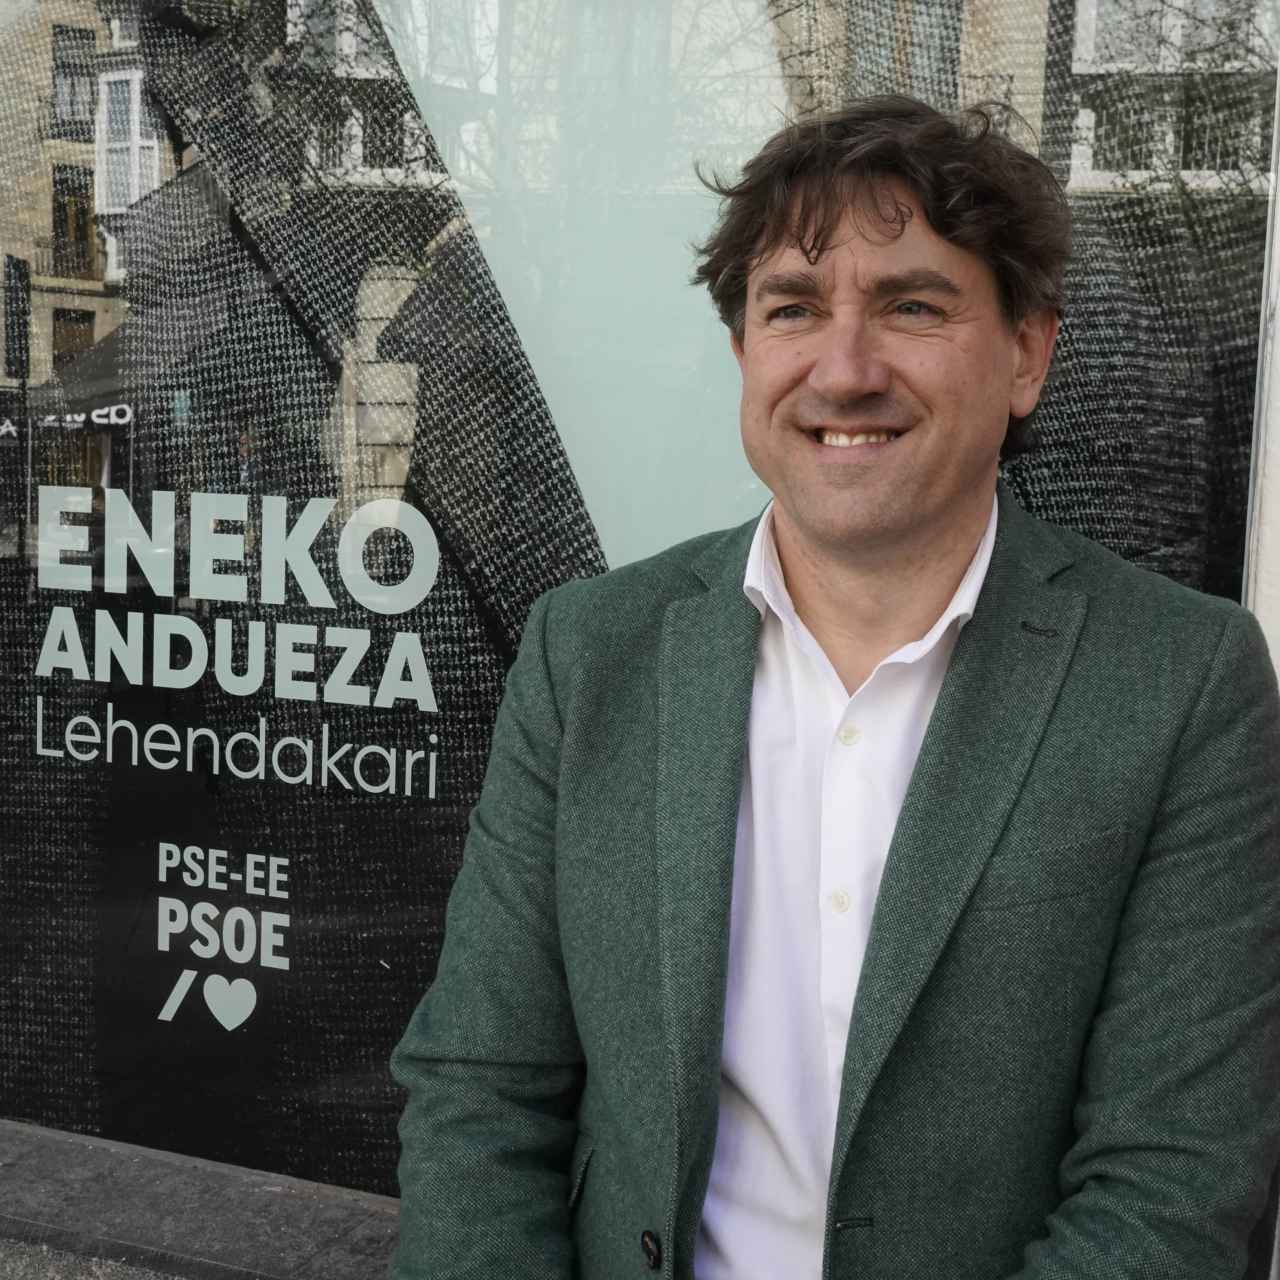 El candidato a lehendakari del PSE-EE, Eneko Andueza / Paulino Oribe